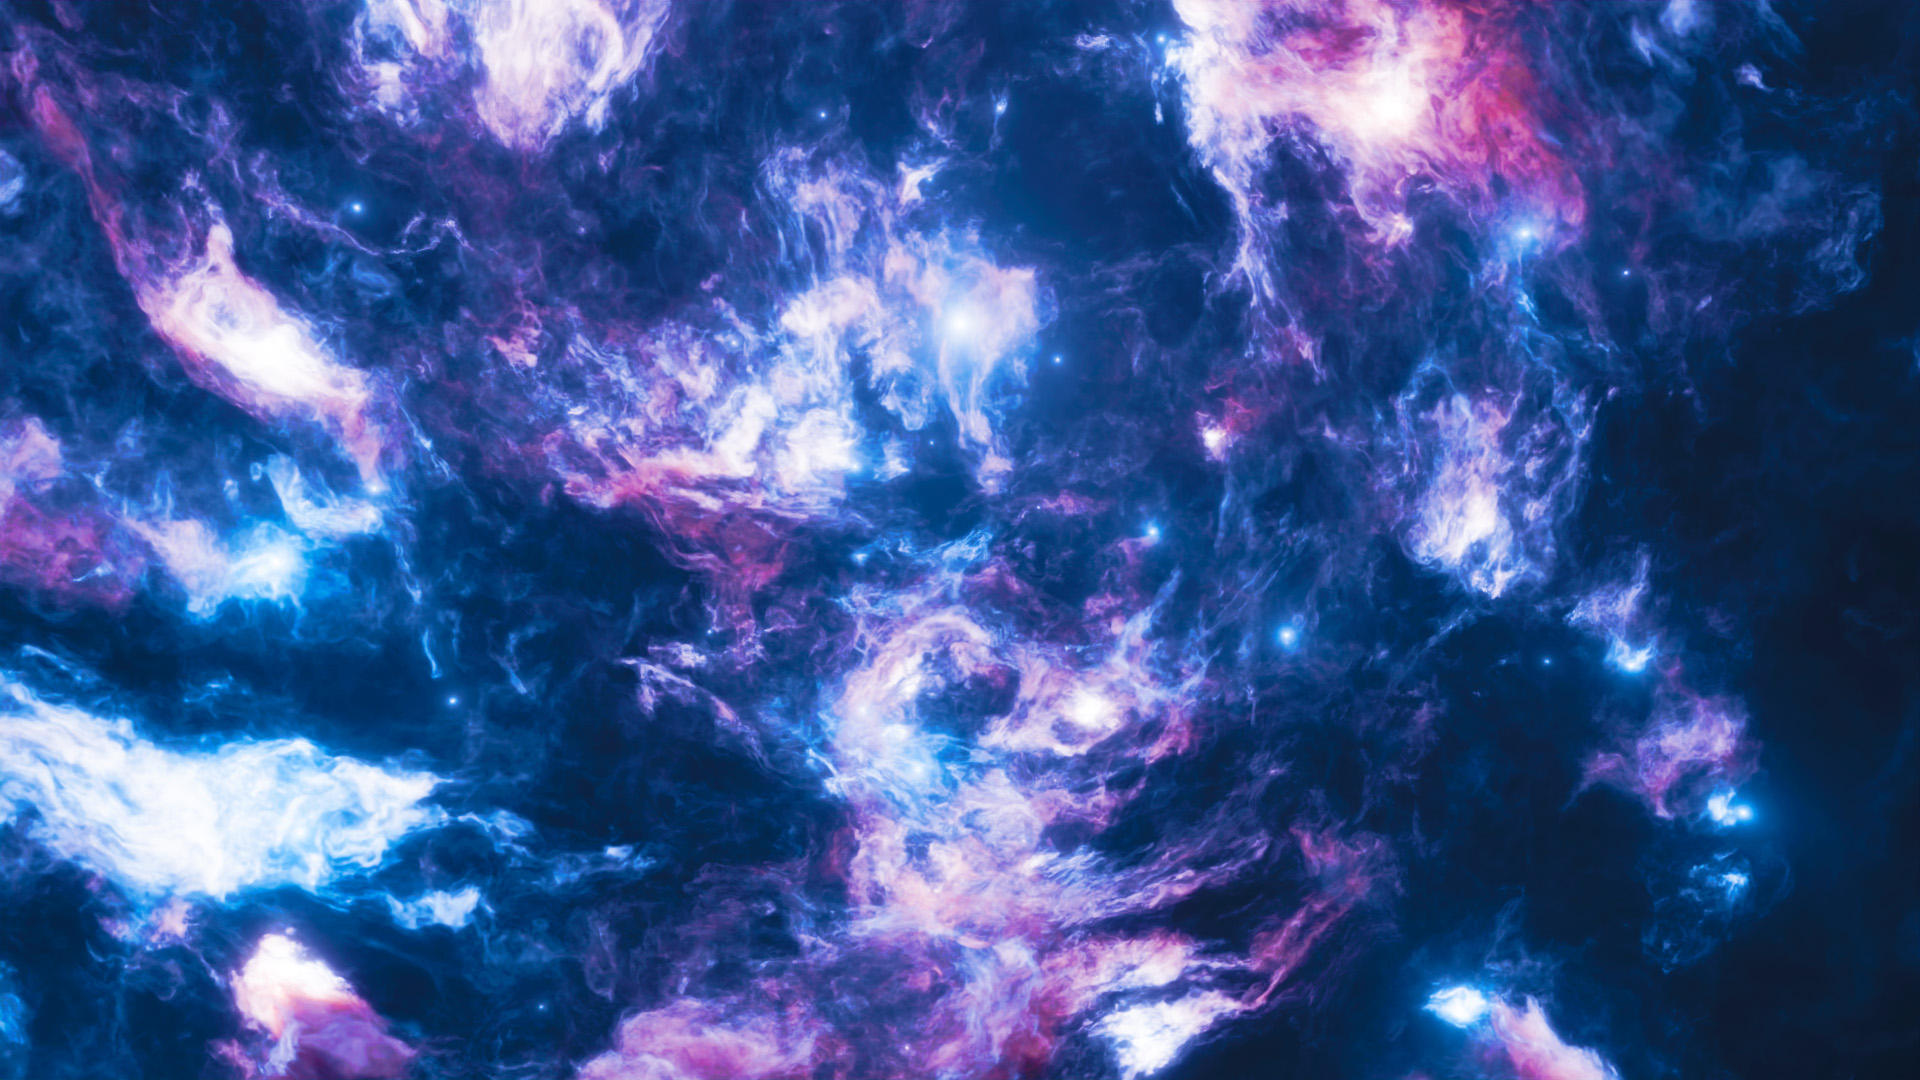 cg blue and pink nebulae high detail